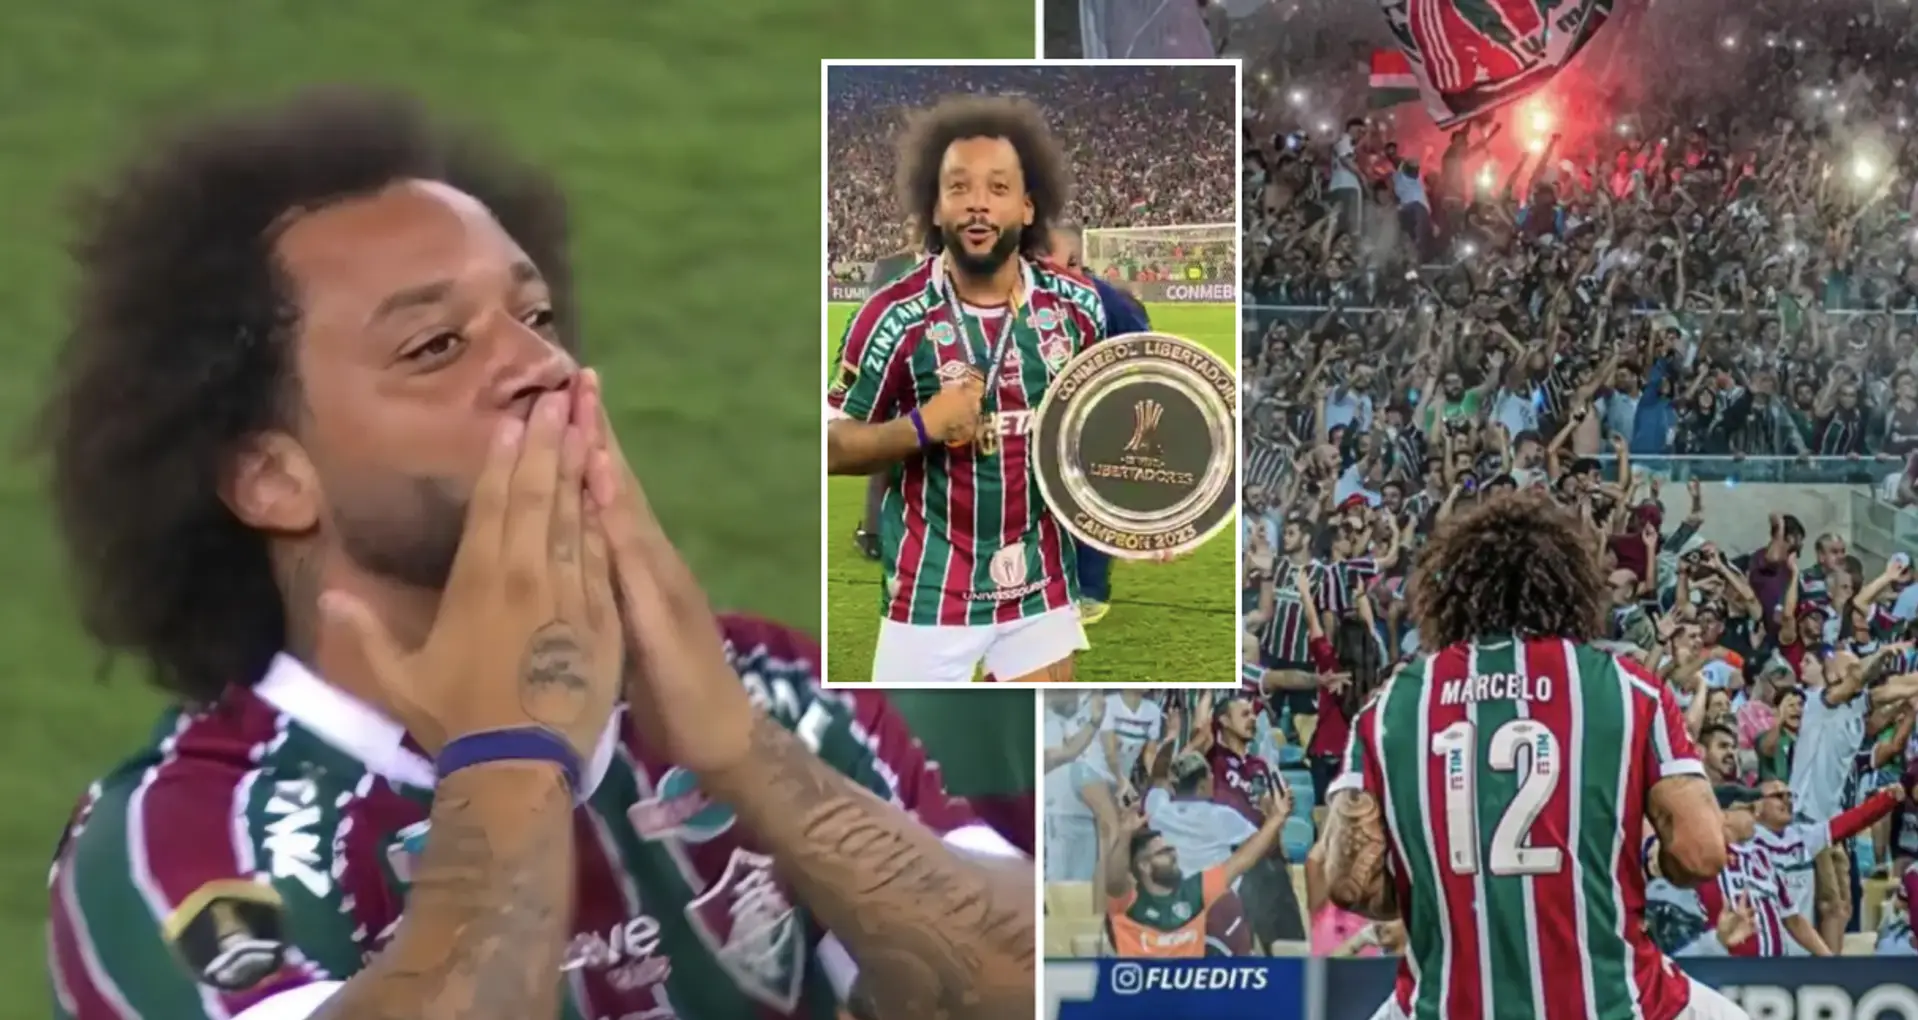 Marcelo in tears as he celebrates first Copa Libertadores win with boyhood club Fluminense